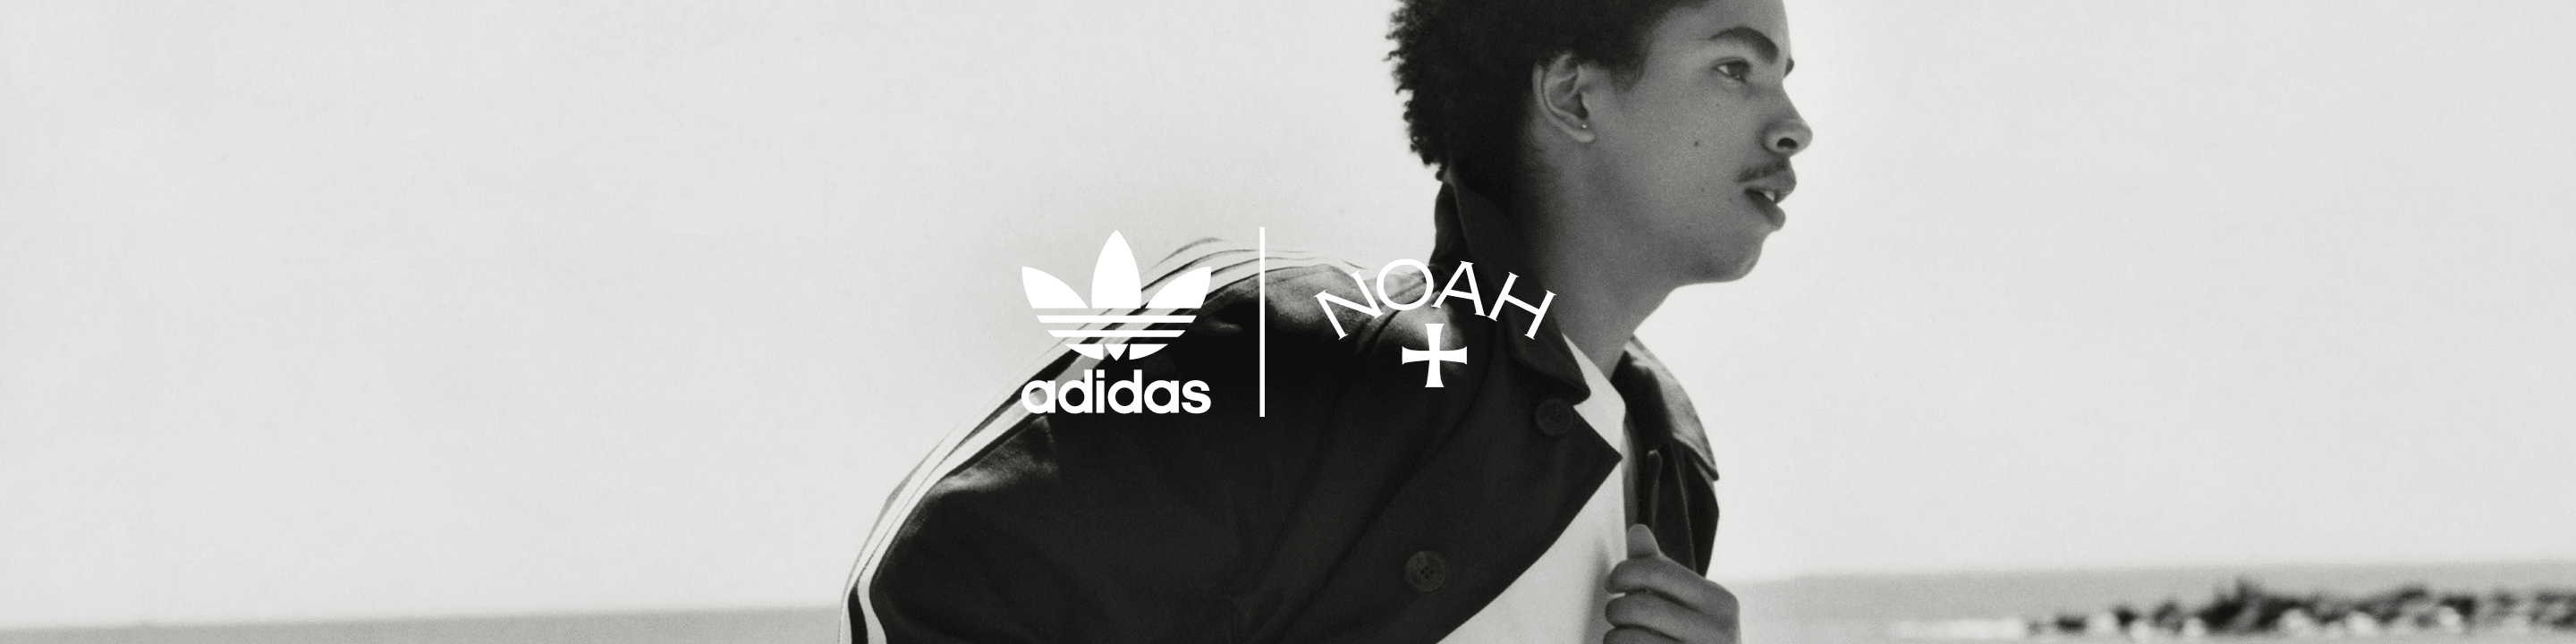 adidas Originals by Noah